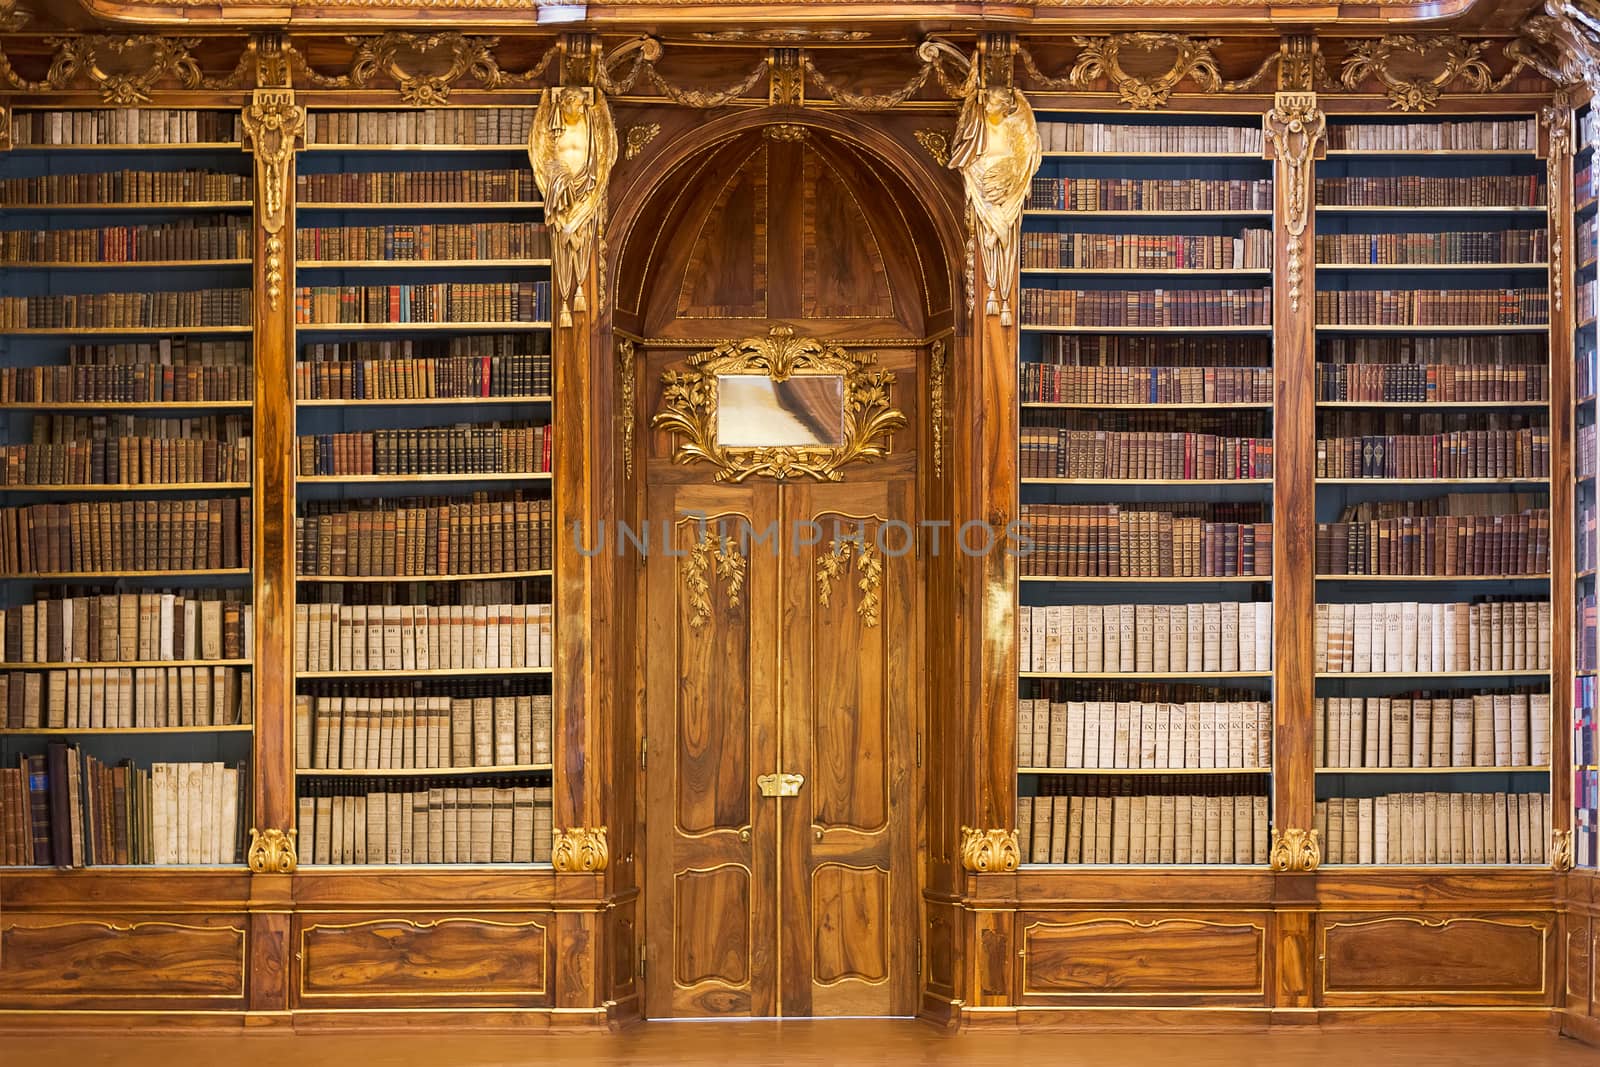 PRAGUE, CZECH REPUBLIC - JANUARY 04, 2014: Philosophical Hall of the Strahov Monastery Library